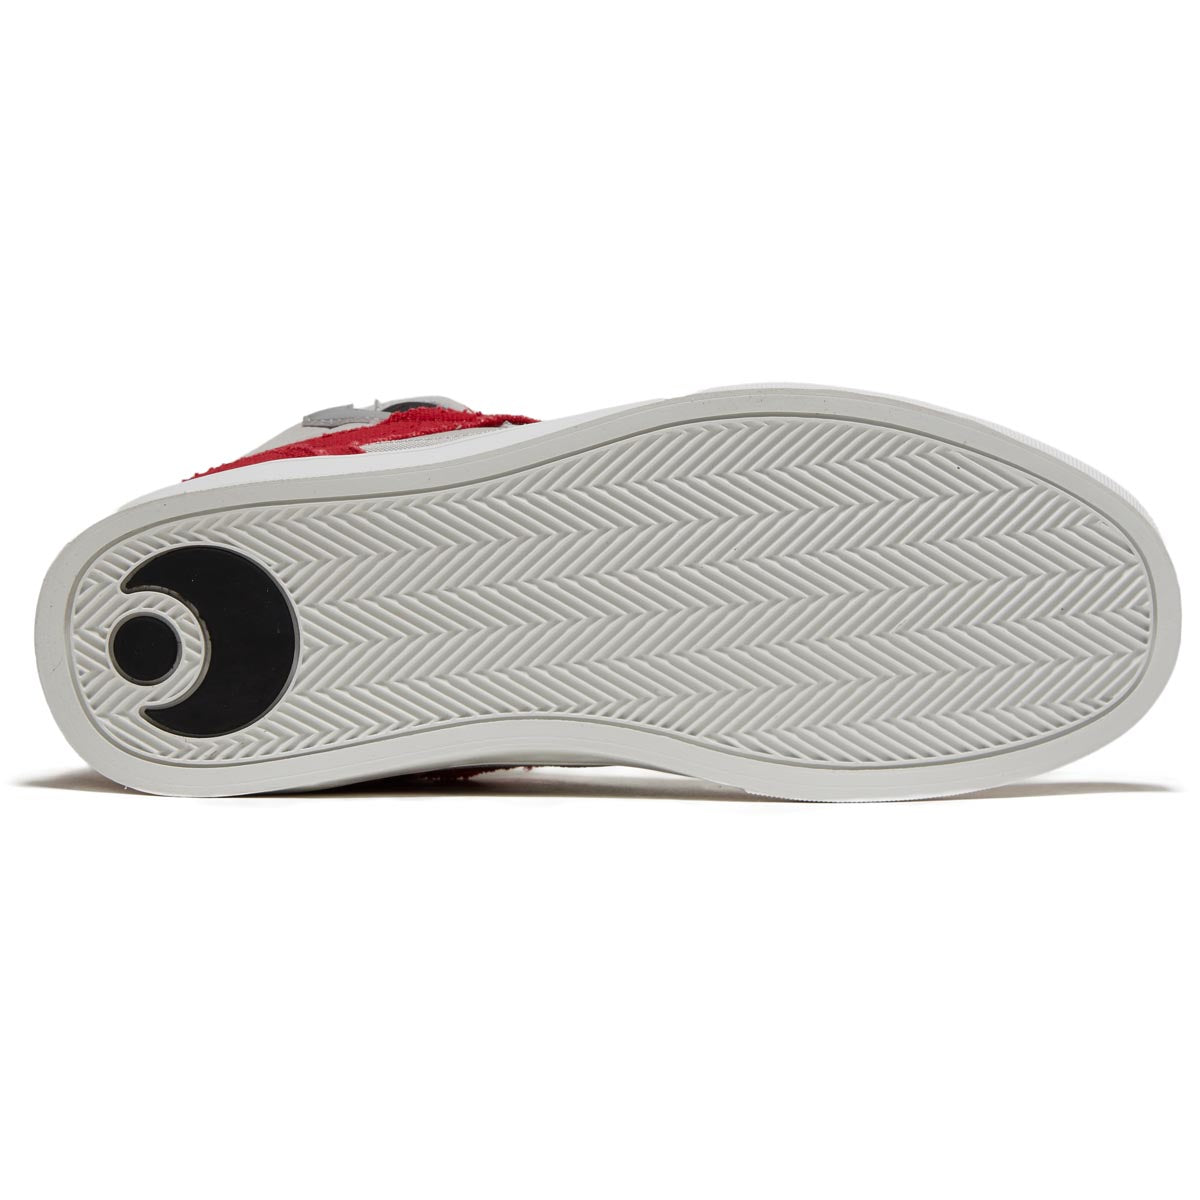 Osiris Clone Shoes - White/Red/Navy image 4